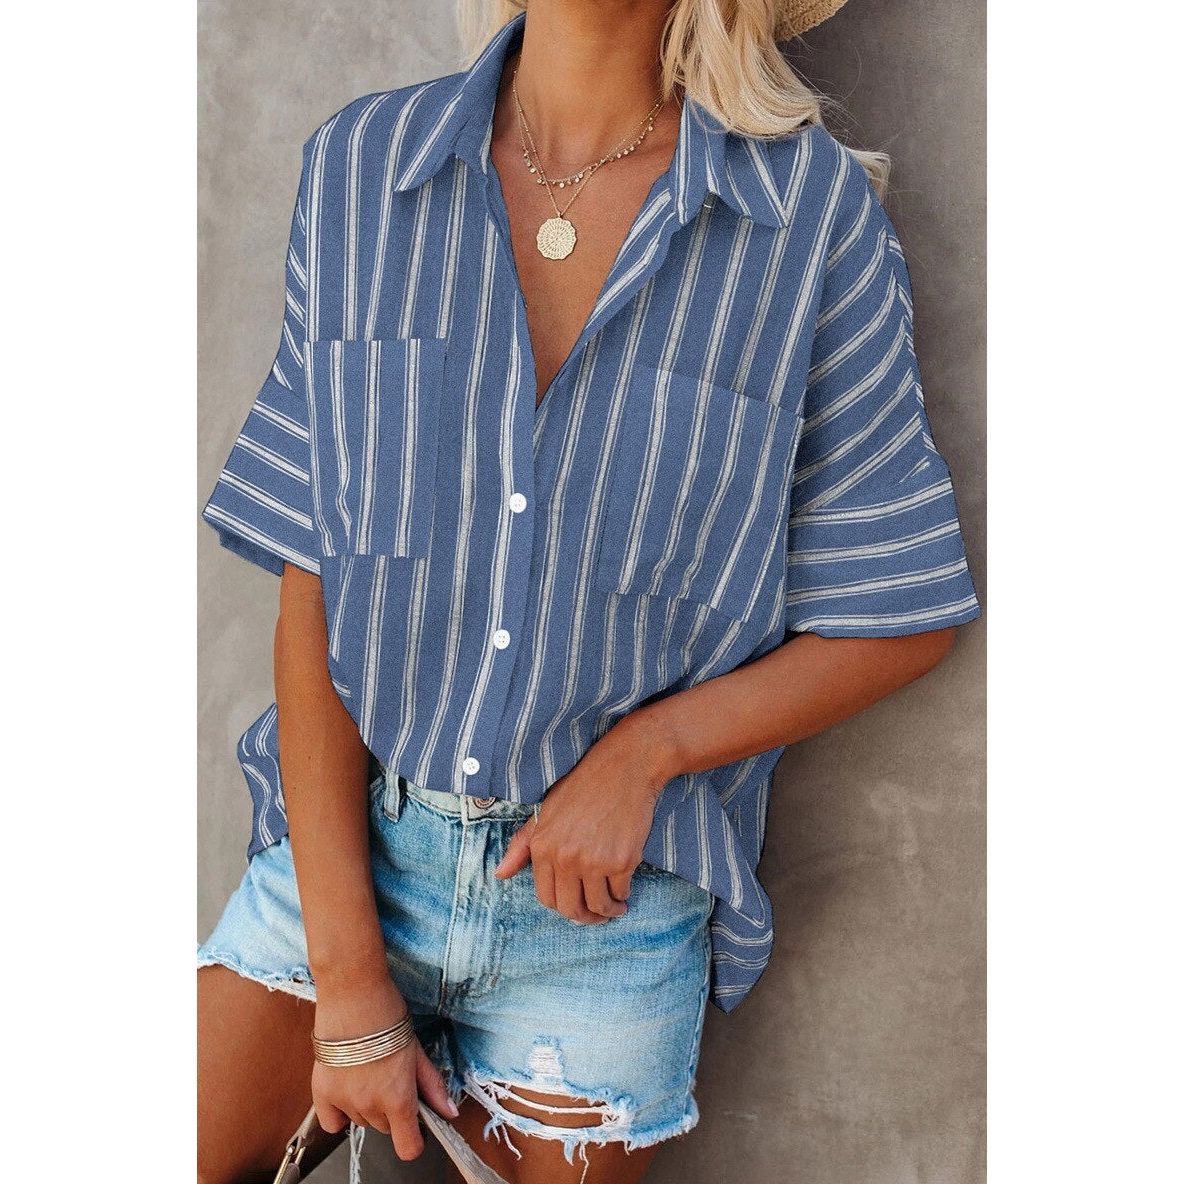 Women's Striped Short Sleeves Shirt Loose Style - Light Blue/Black/Blue - Frimunt Clothing Co.